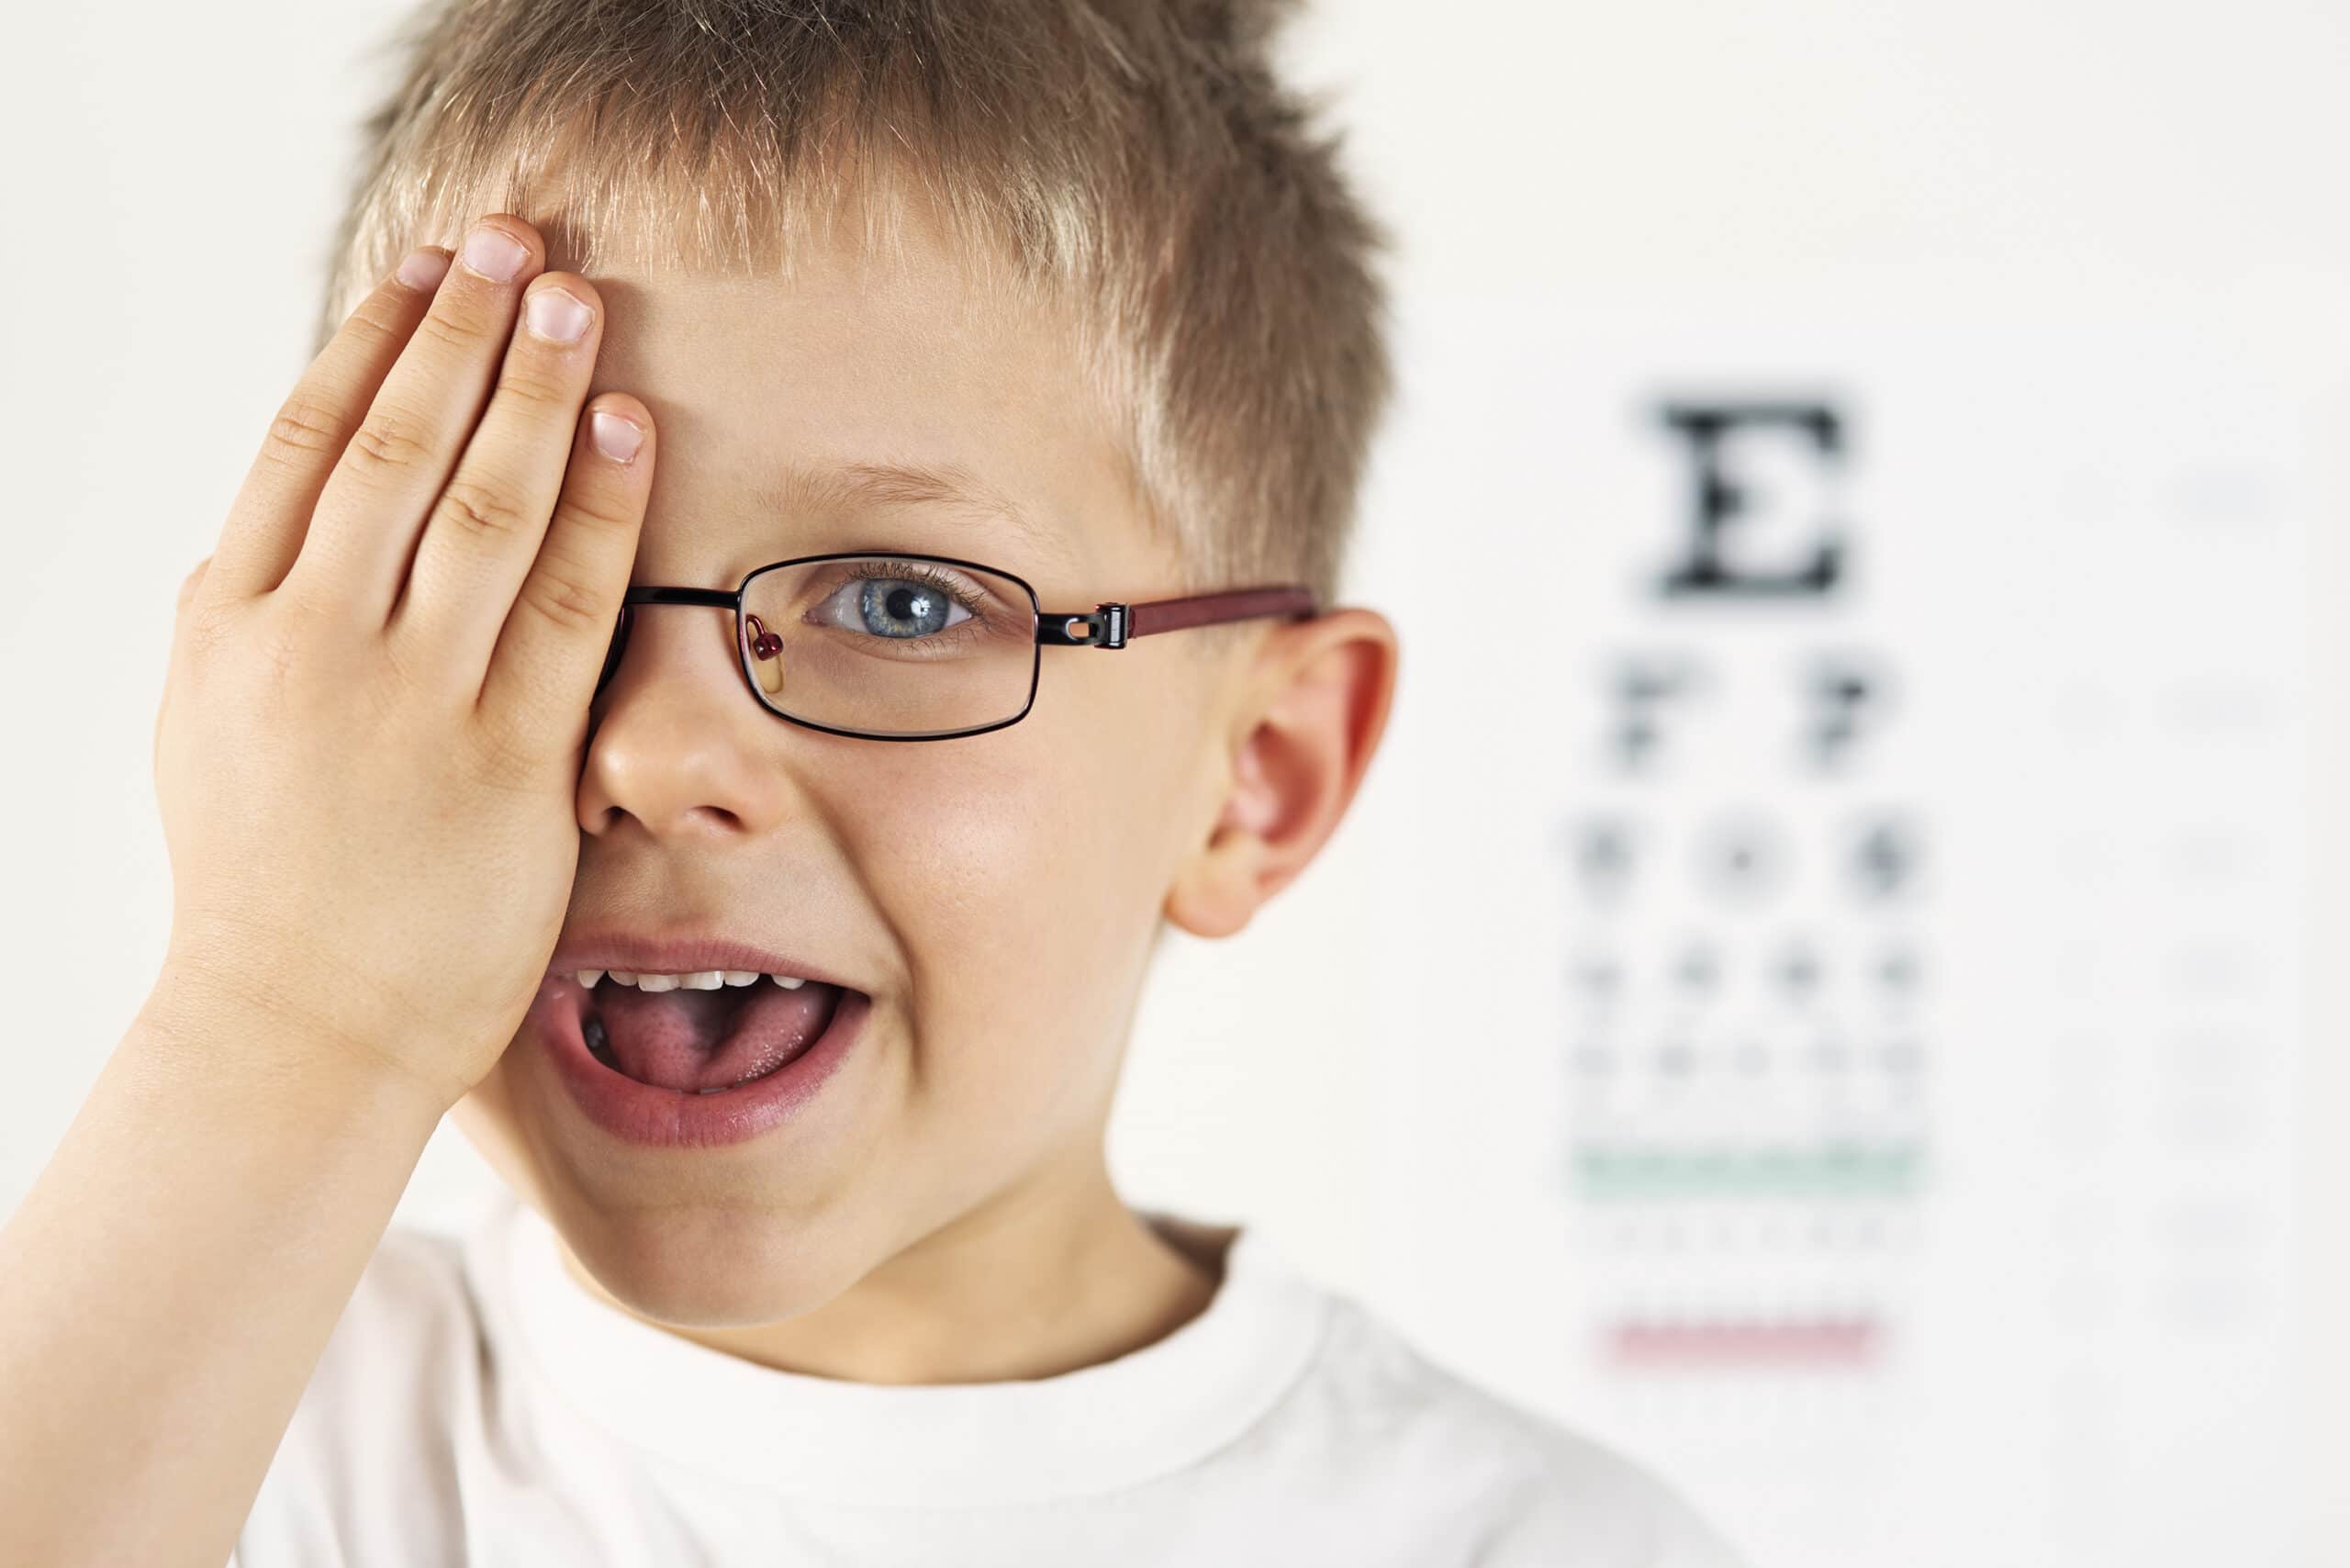 Little boy having eye exam.